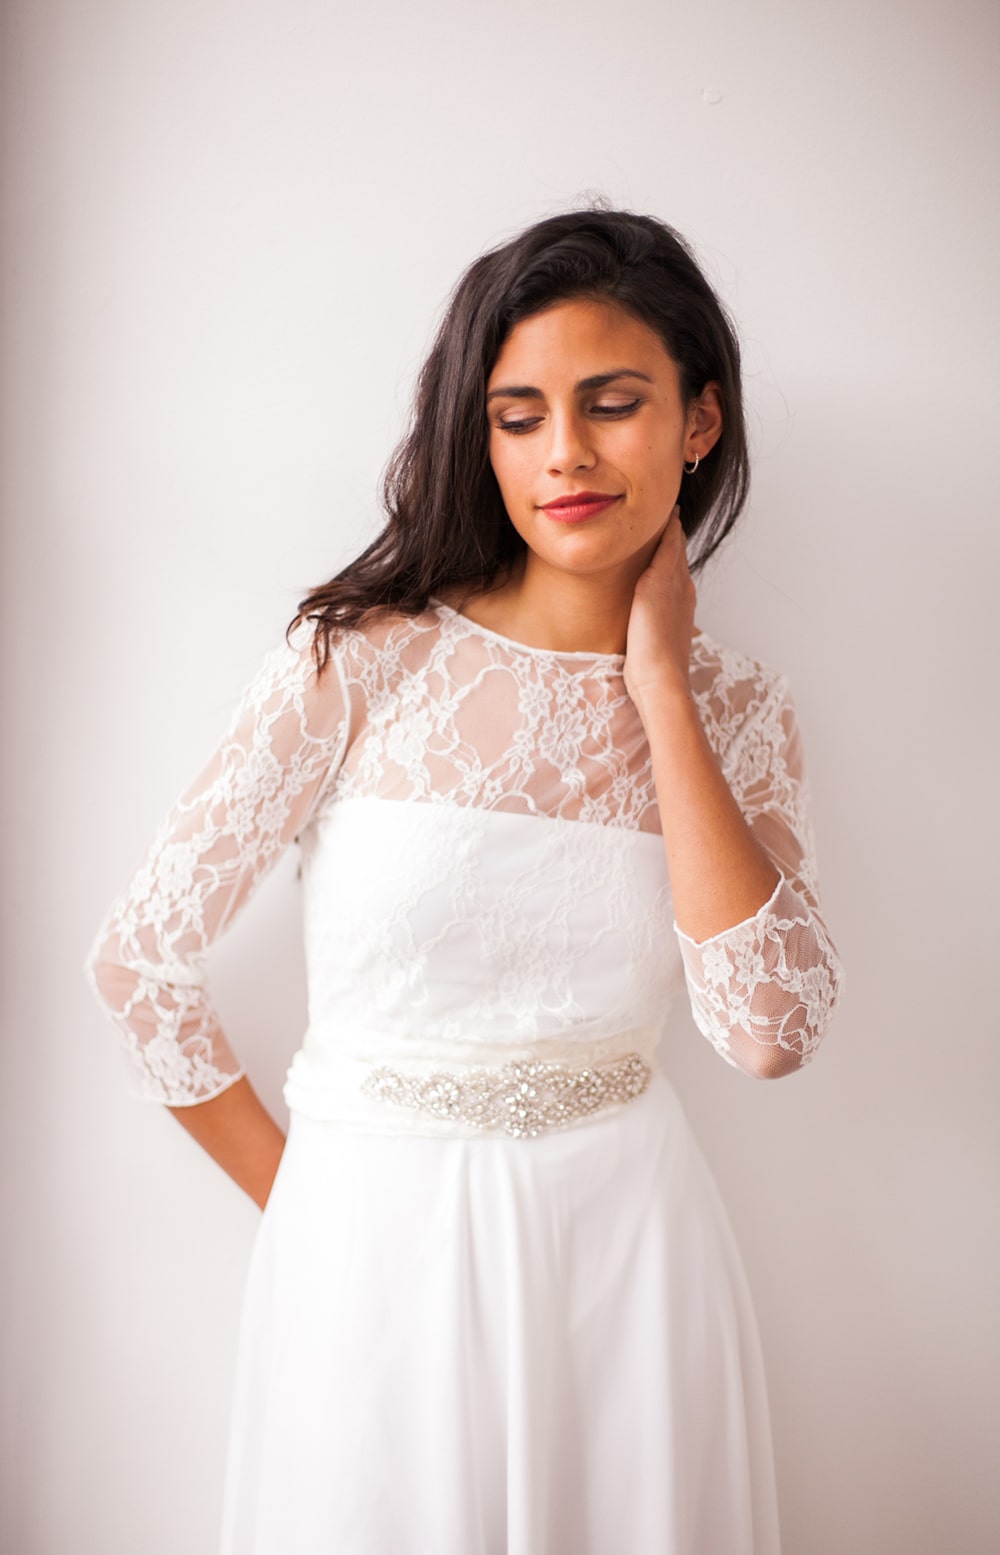 Collection or custom wedding dress? – Mimetik